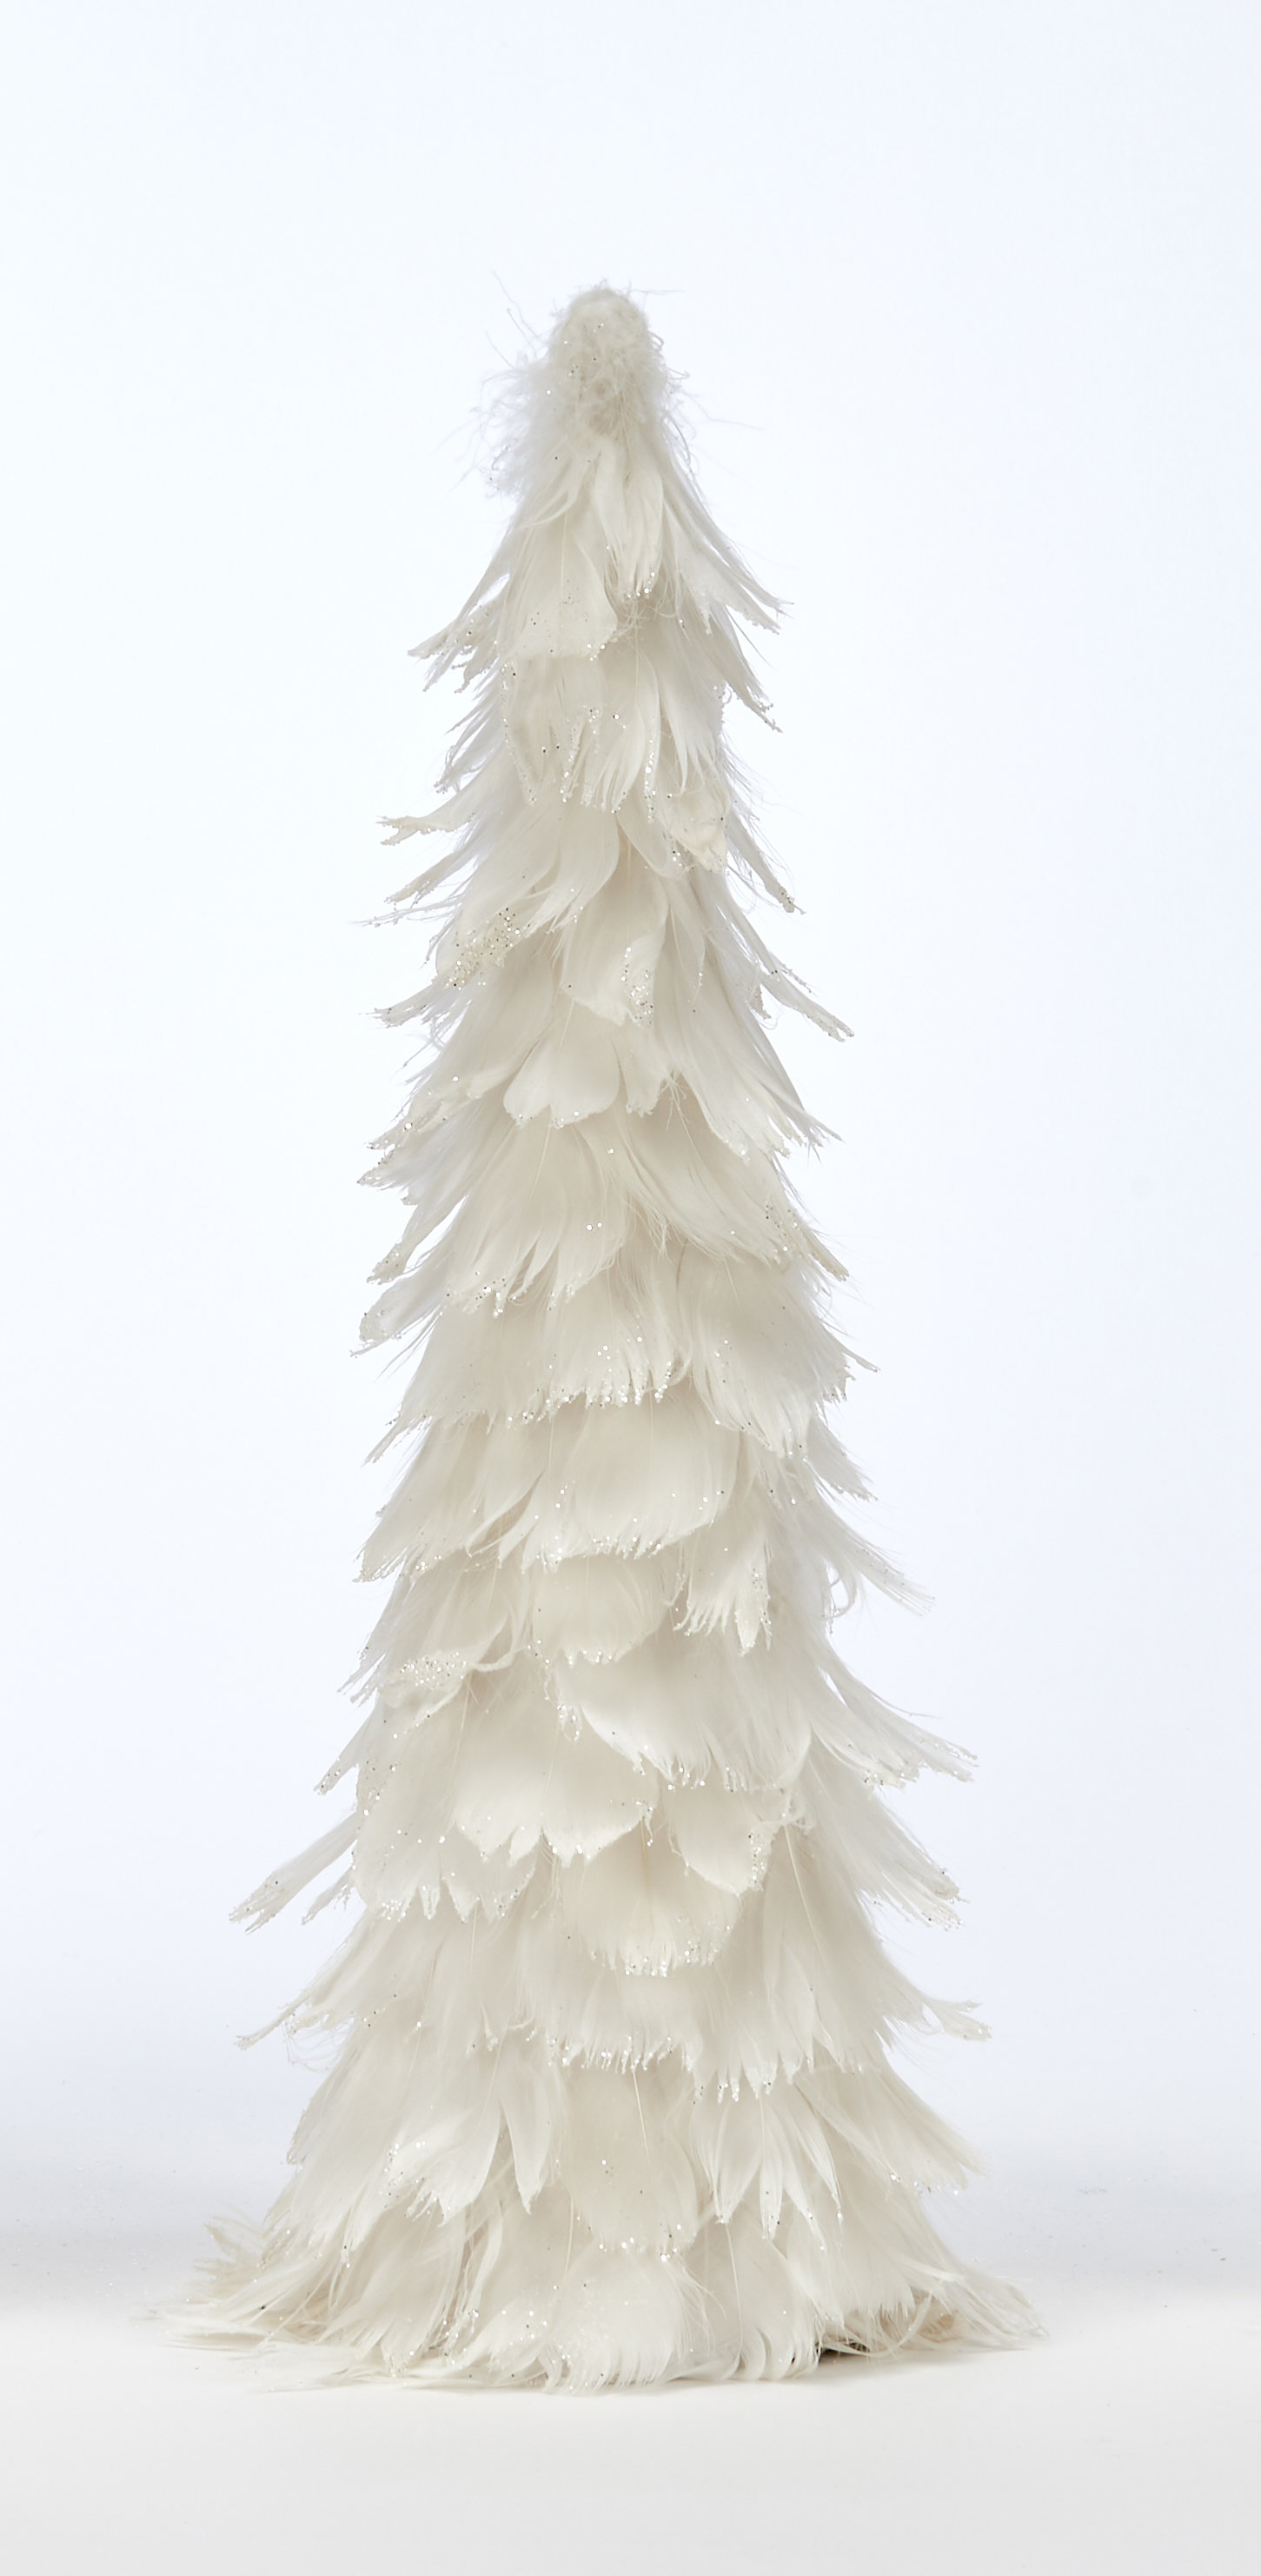 SNOW FOAM PRODUCTS INC. STAK TREE - 18 STYROFOAM CHRISTMAS TREE